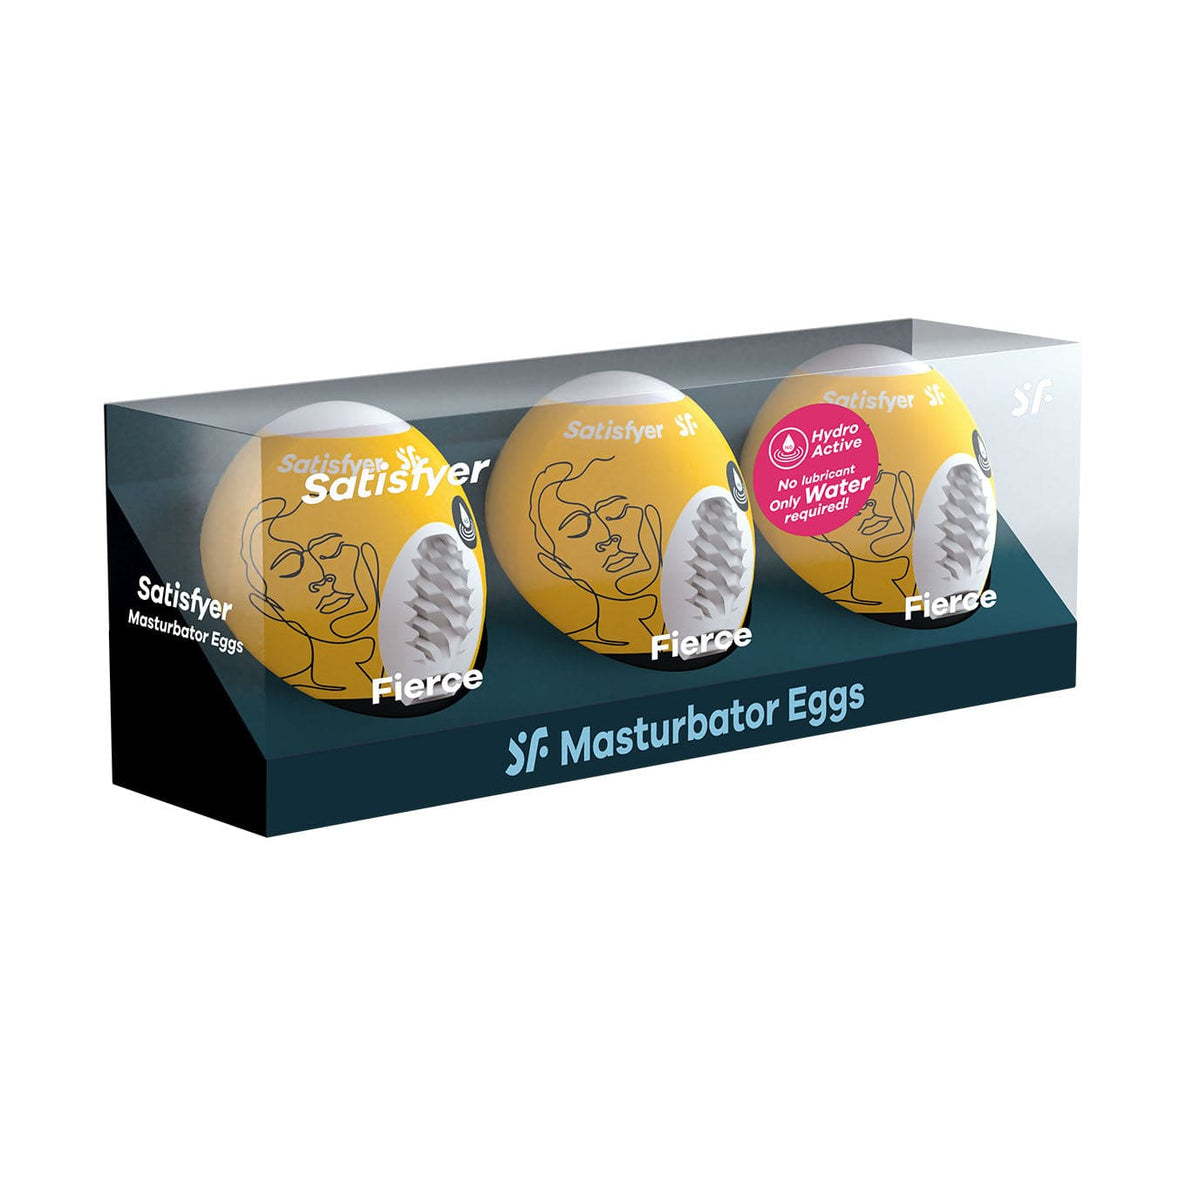 Satisfyer - 3 Fierce Masturbator Eggs Set (Yellow) -  Masturbator Egg (Non Vibration)  Durio.sg